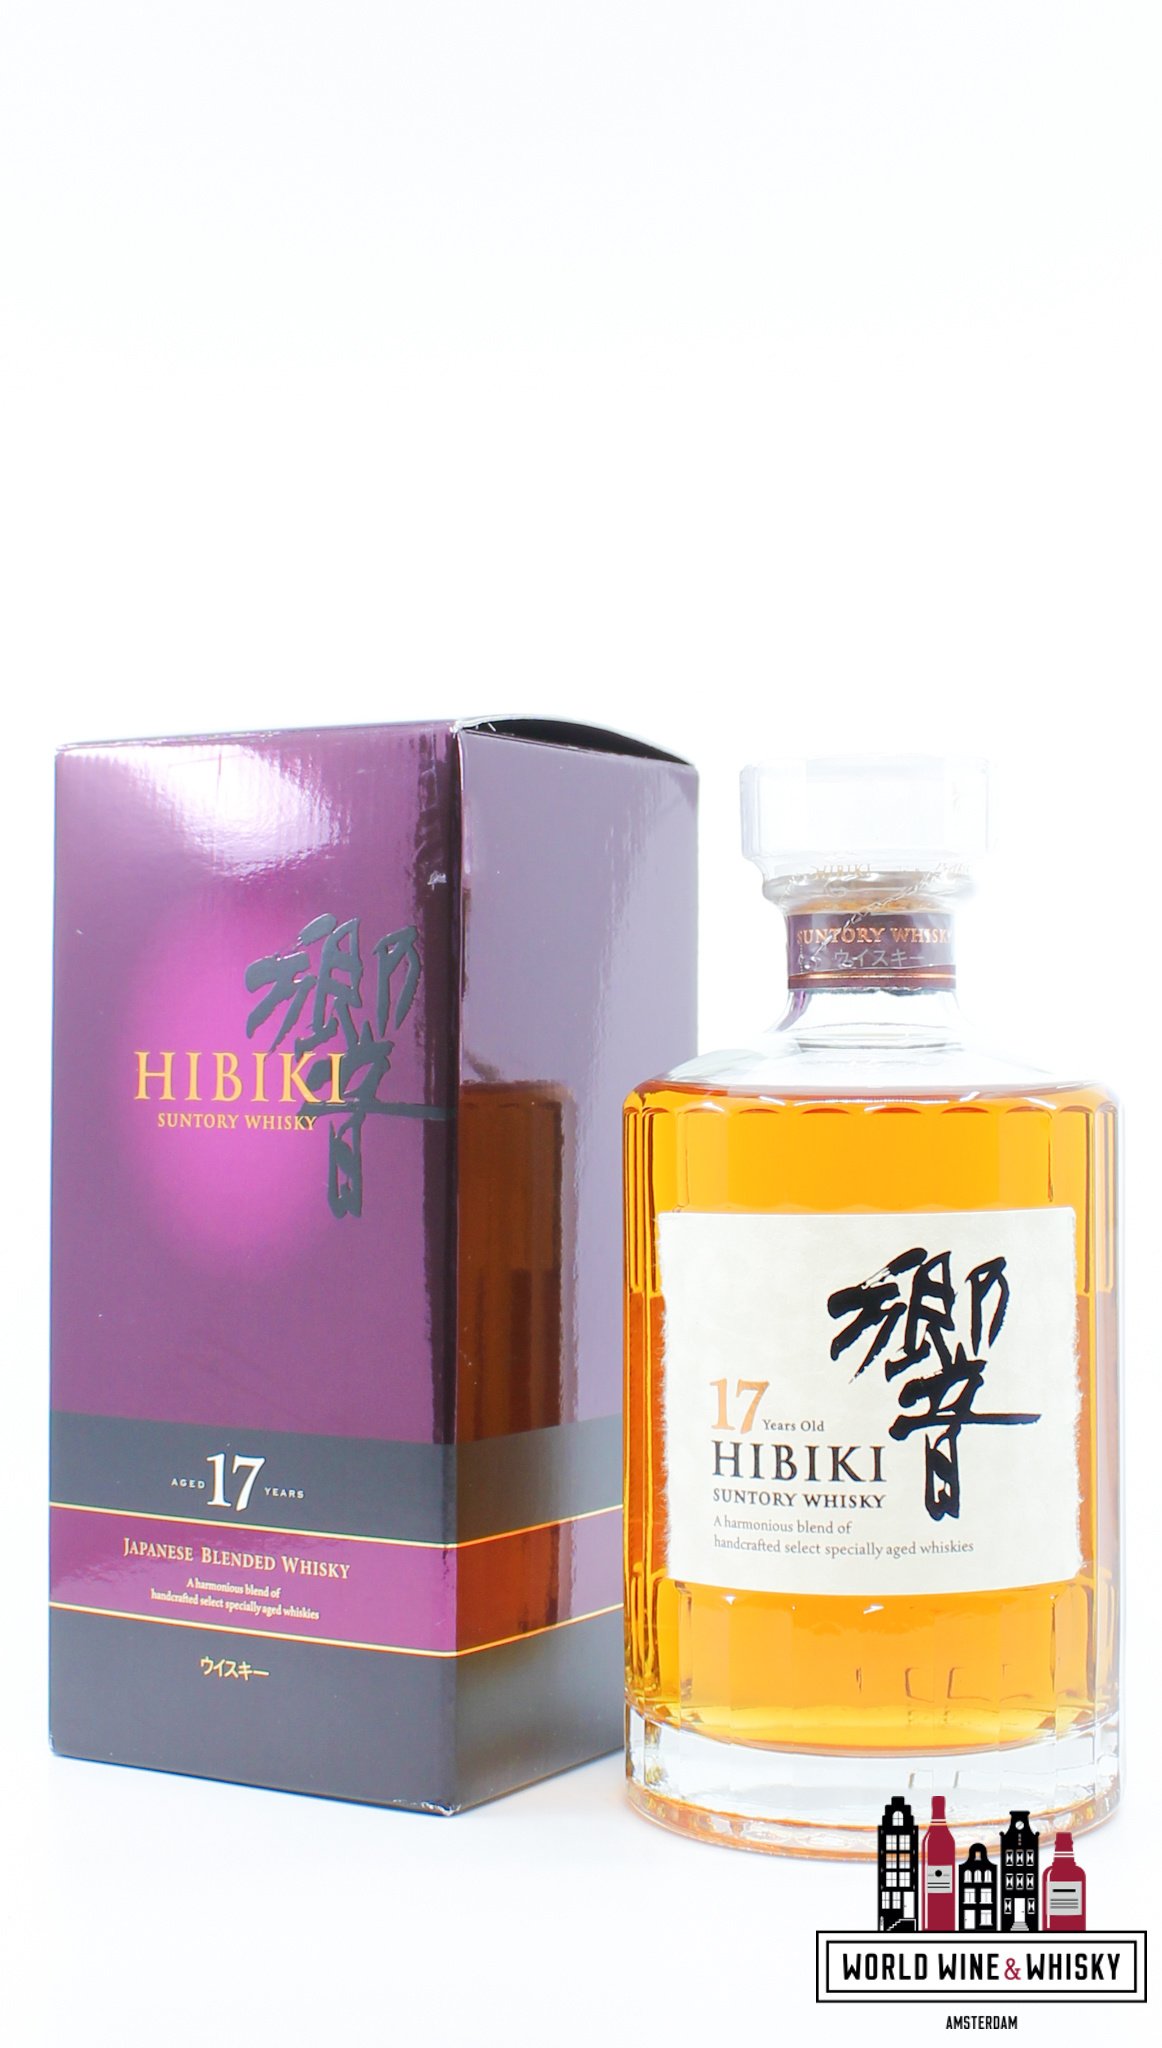 Hibiki 17 Years Old - Suntory Whisky 43% (in the purple box 